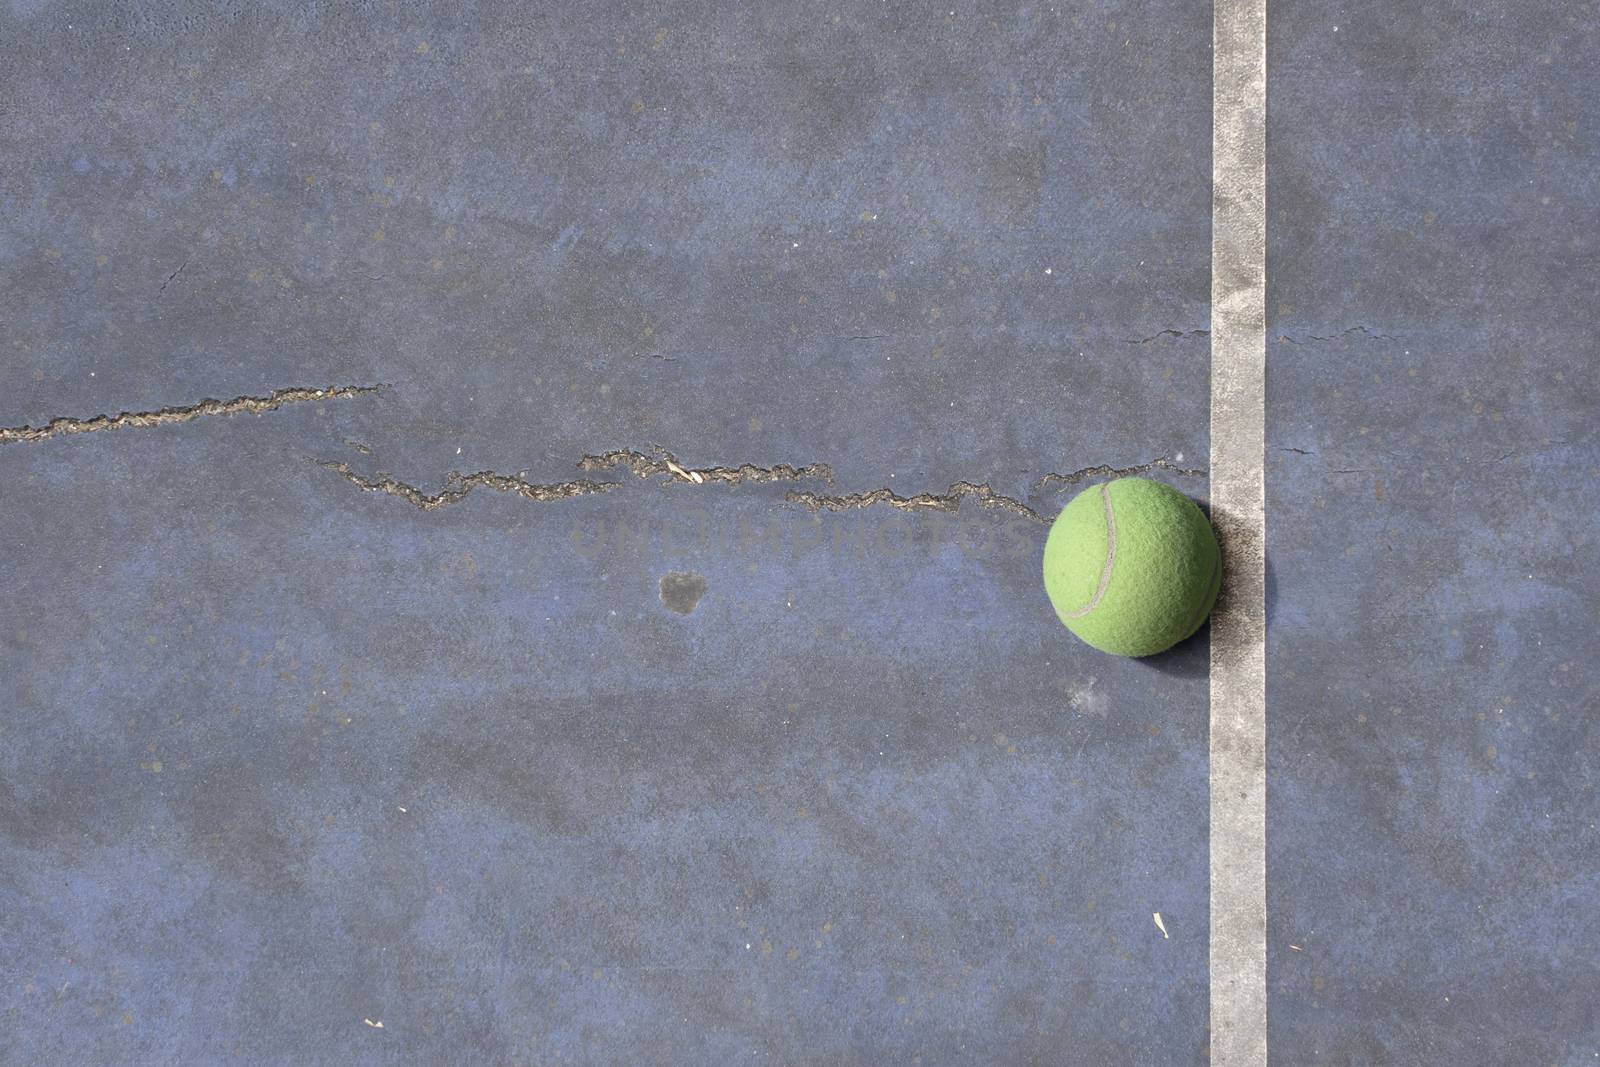 Tennisball on a blue rundown tennis court by Tjeerdkruse